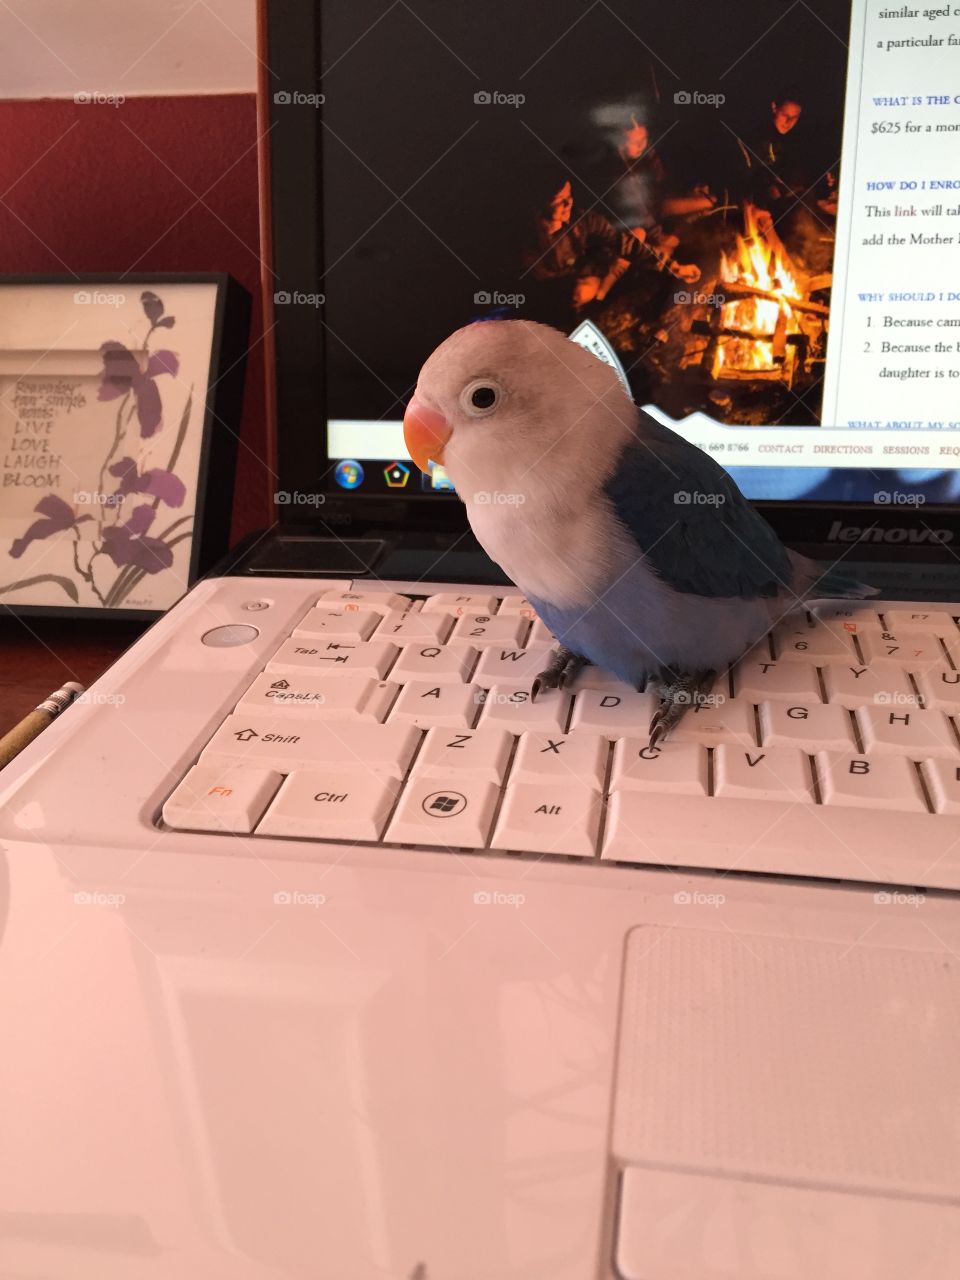 Working lovebird